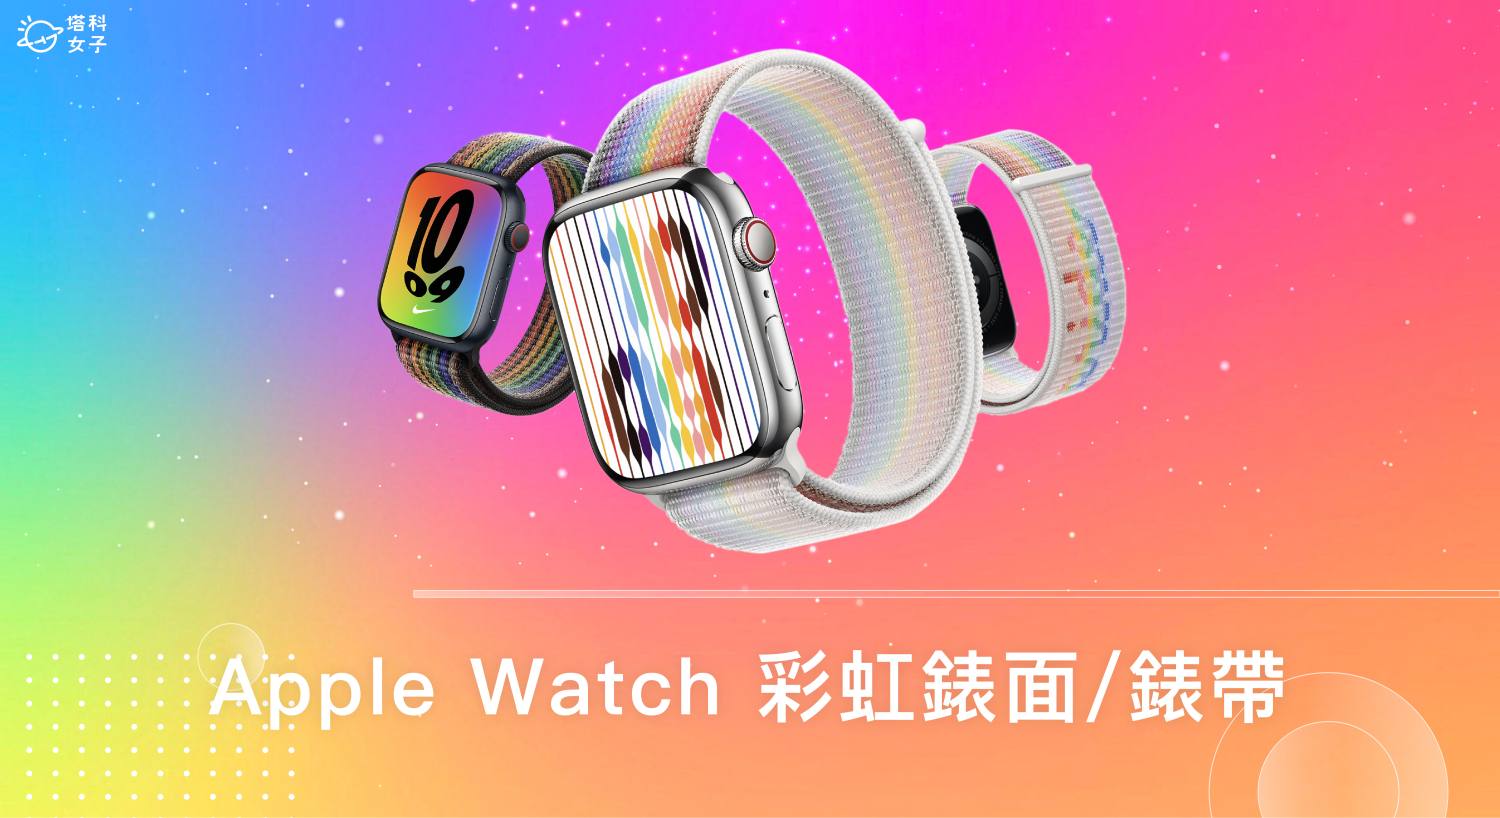 Apple Watch 全新「彩虹線條錶面」及「彩虹錶帶」慶祝同志驕傲月